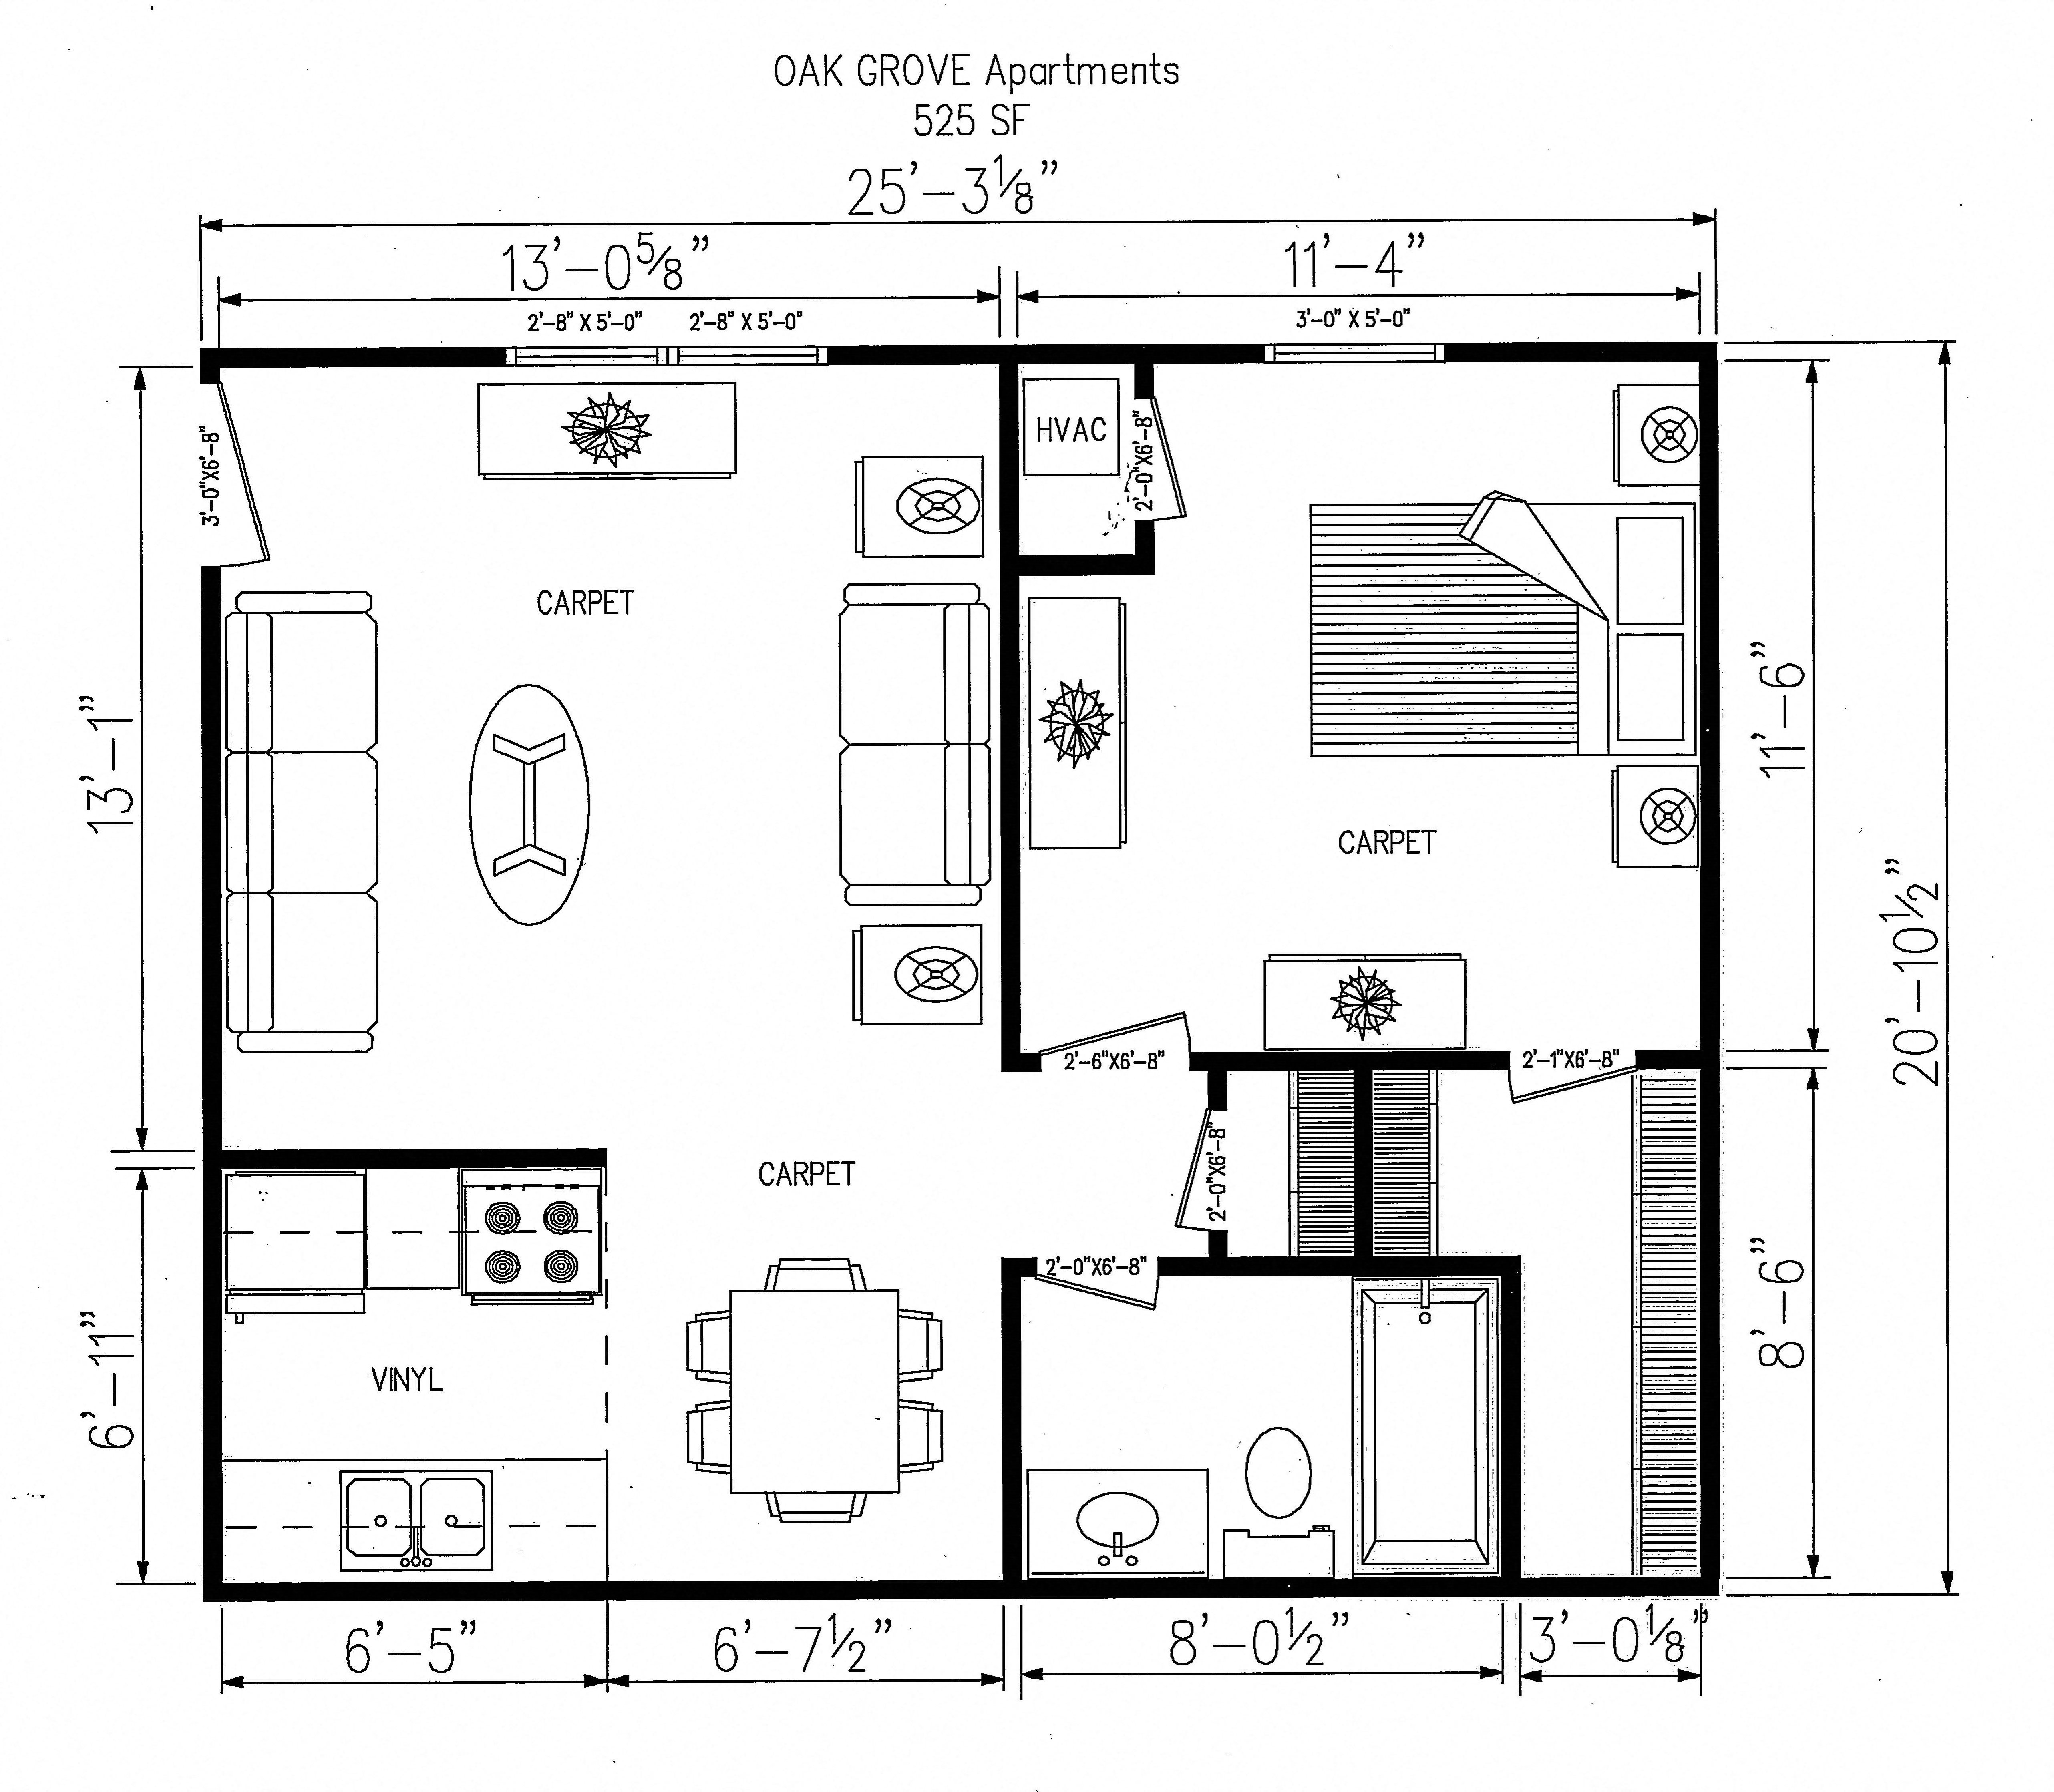 Floor Plans of Oak Grove Apartments in Chesapeake, VA